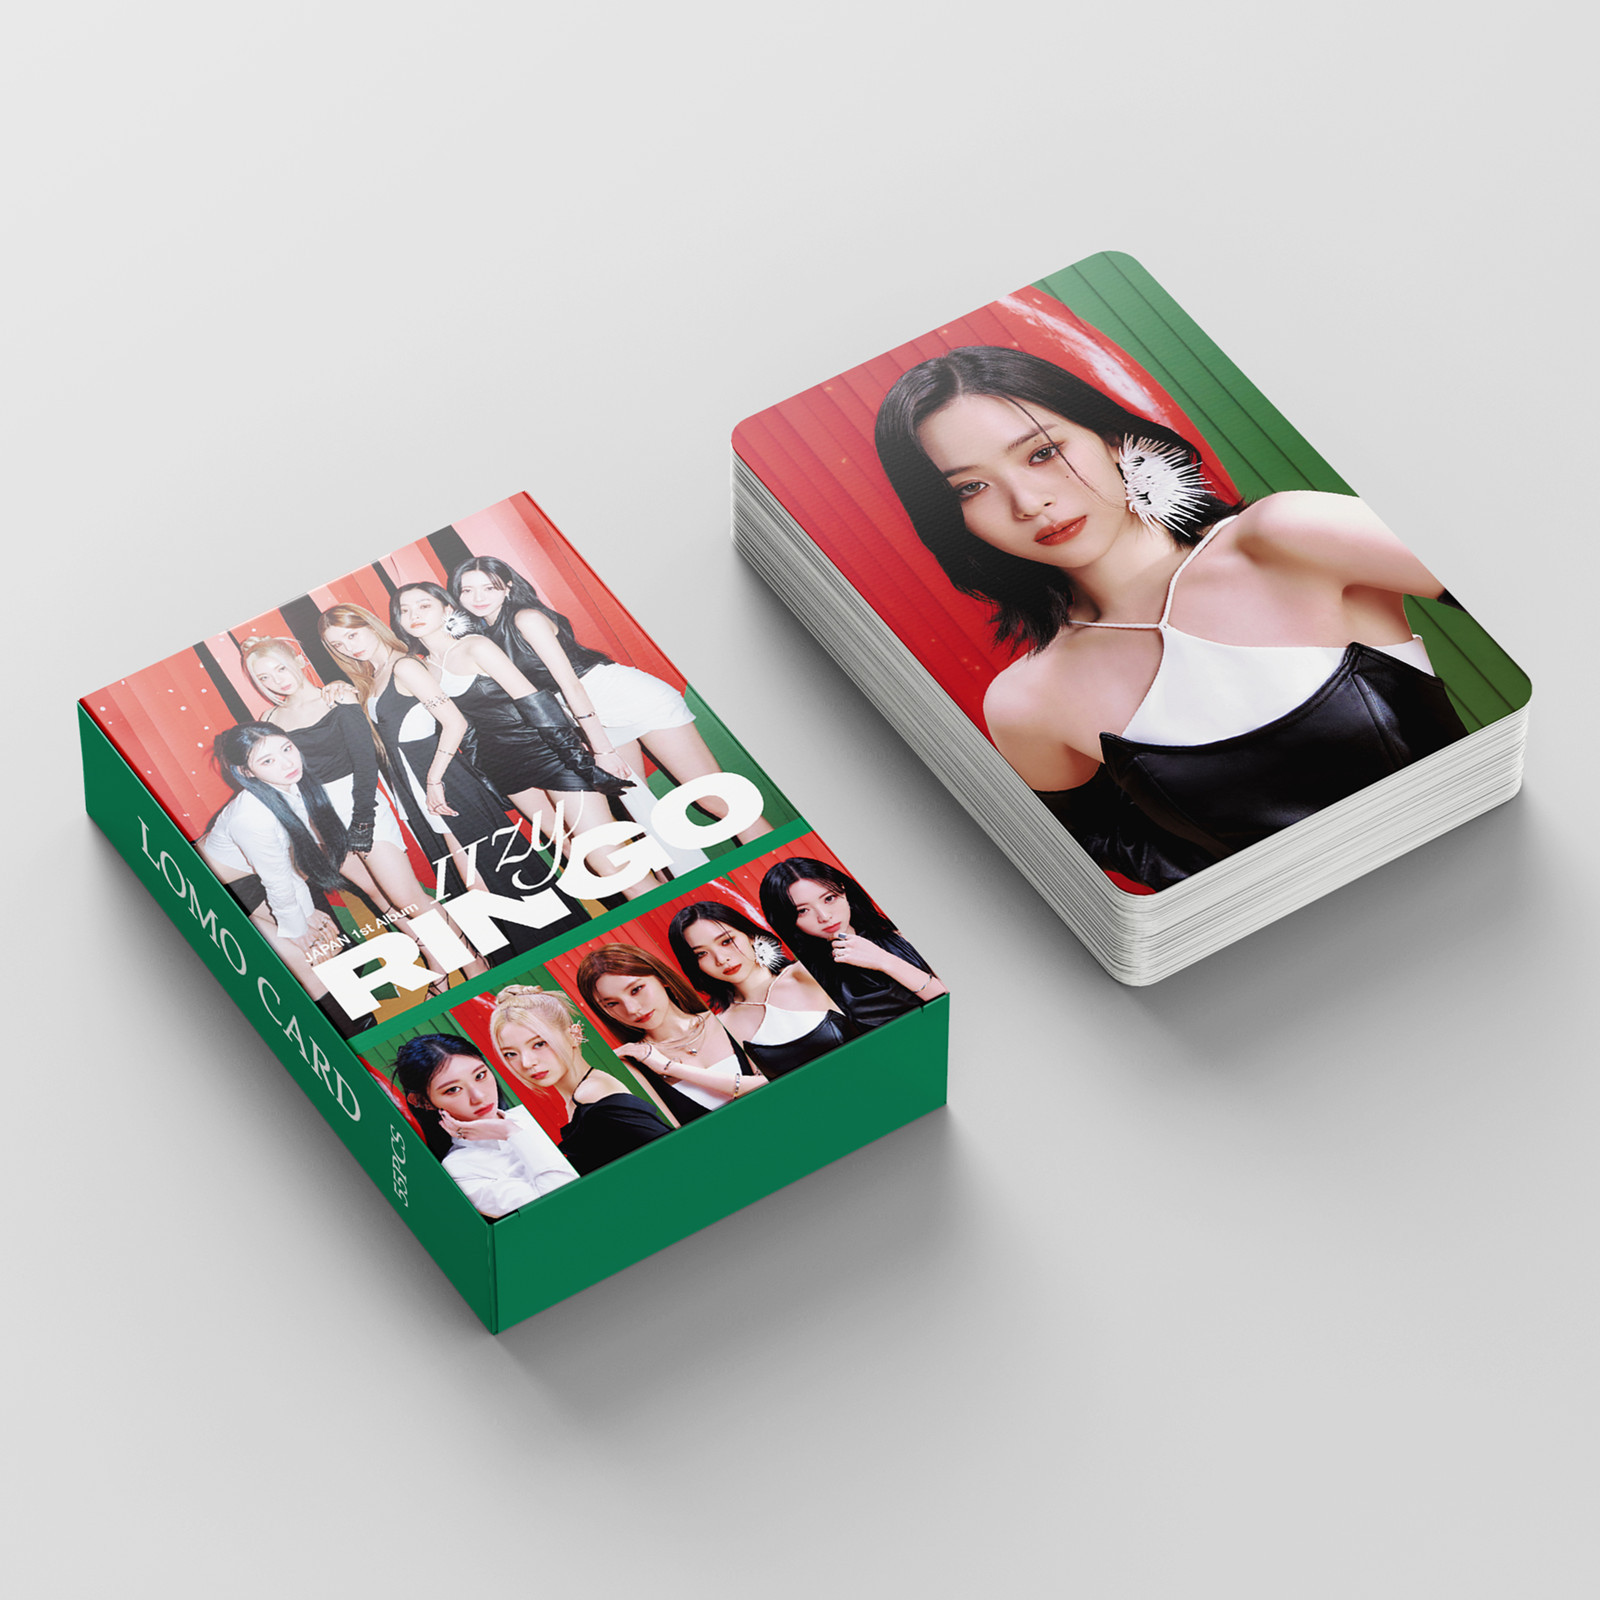 Set 55 lomo card ITZY-Japan 1st Album RINGO 2023